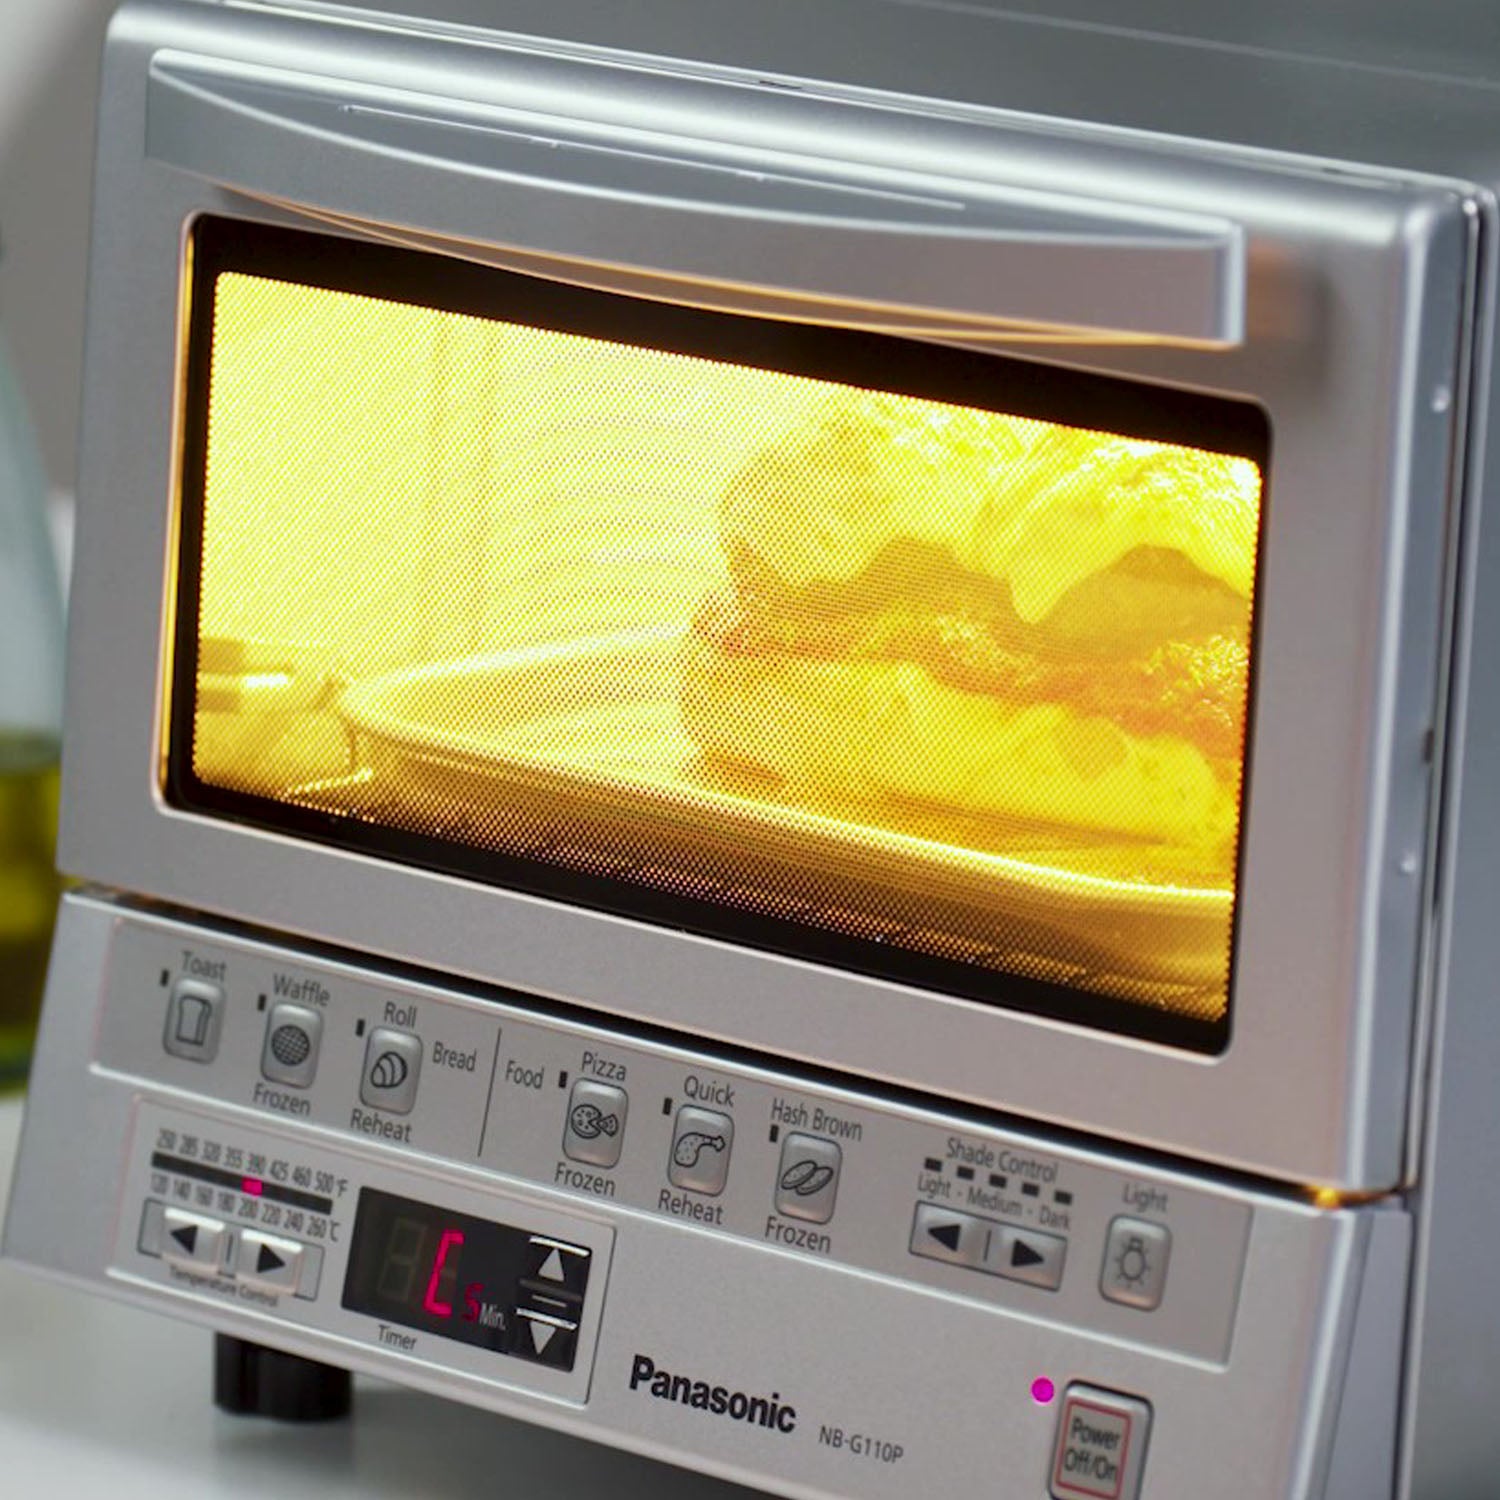 Panasonic Toaster Oven, Compact & Powerful